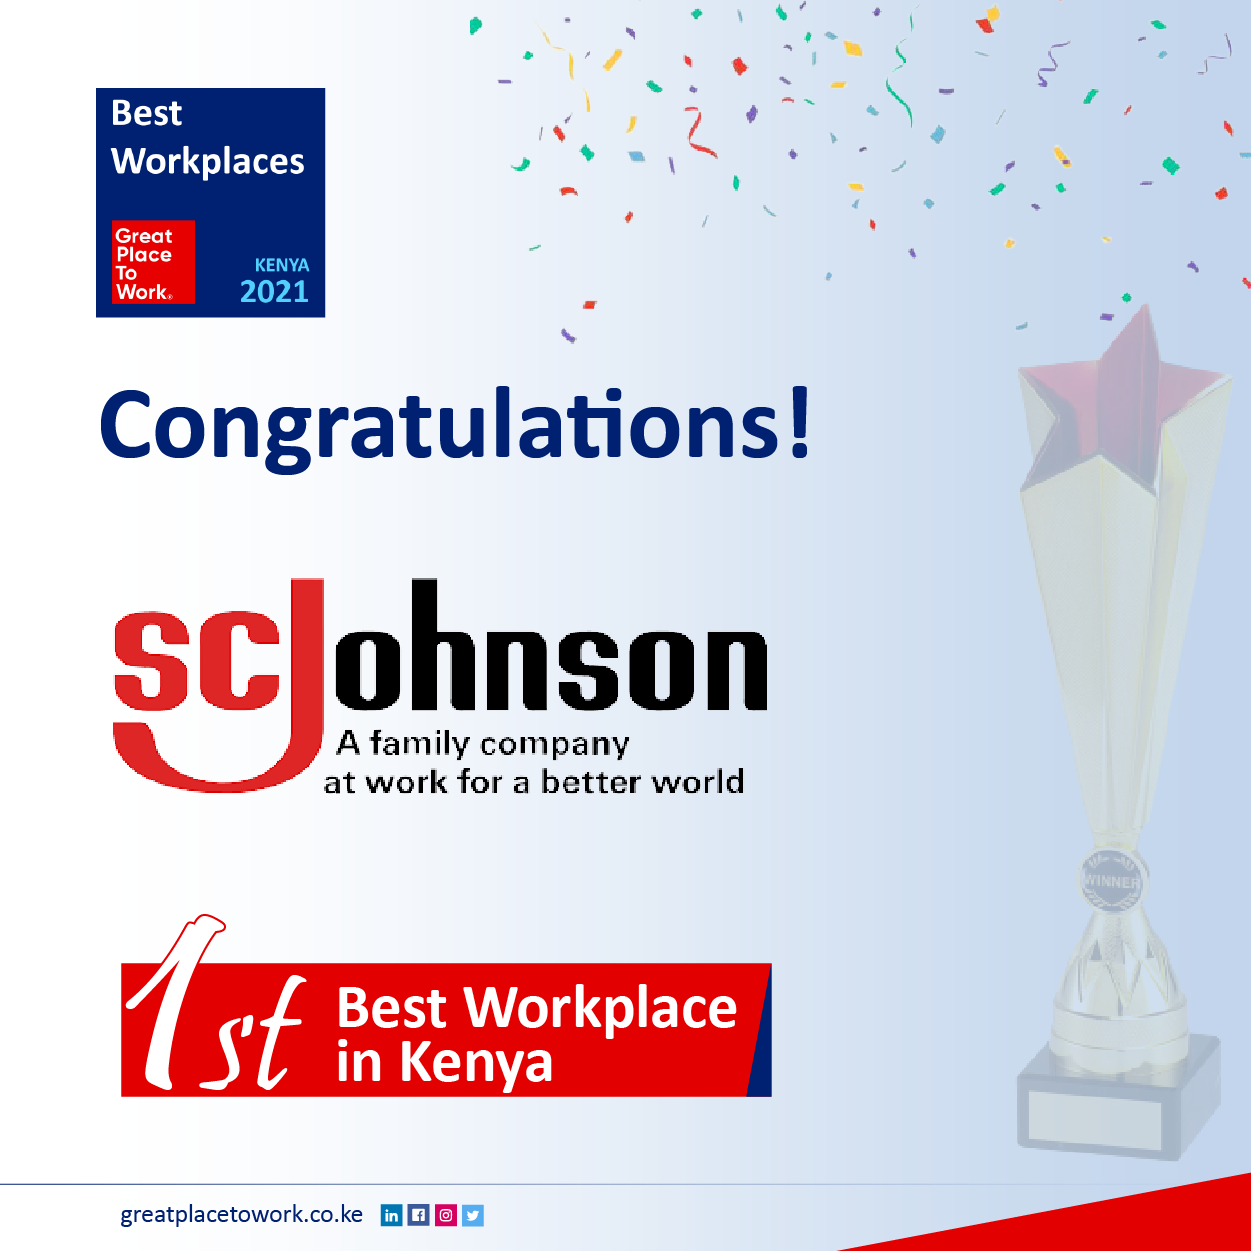  SC Johnson emerges 1st Best Workplace in Kenya 2021 